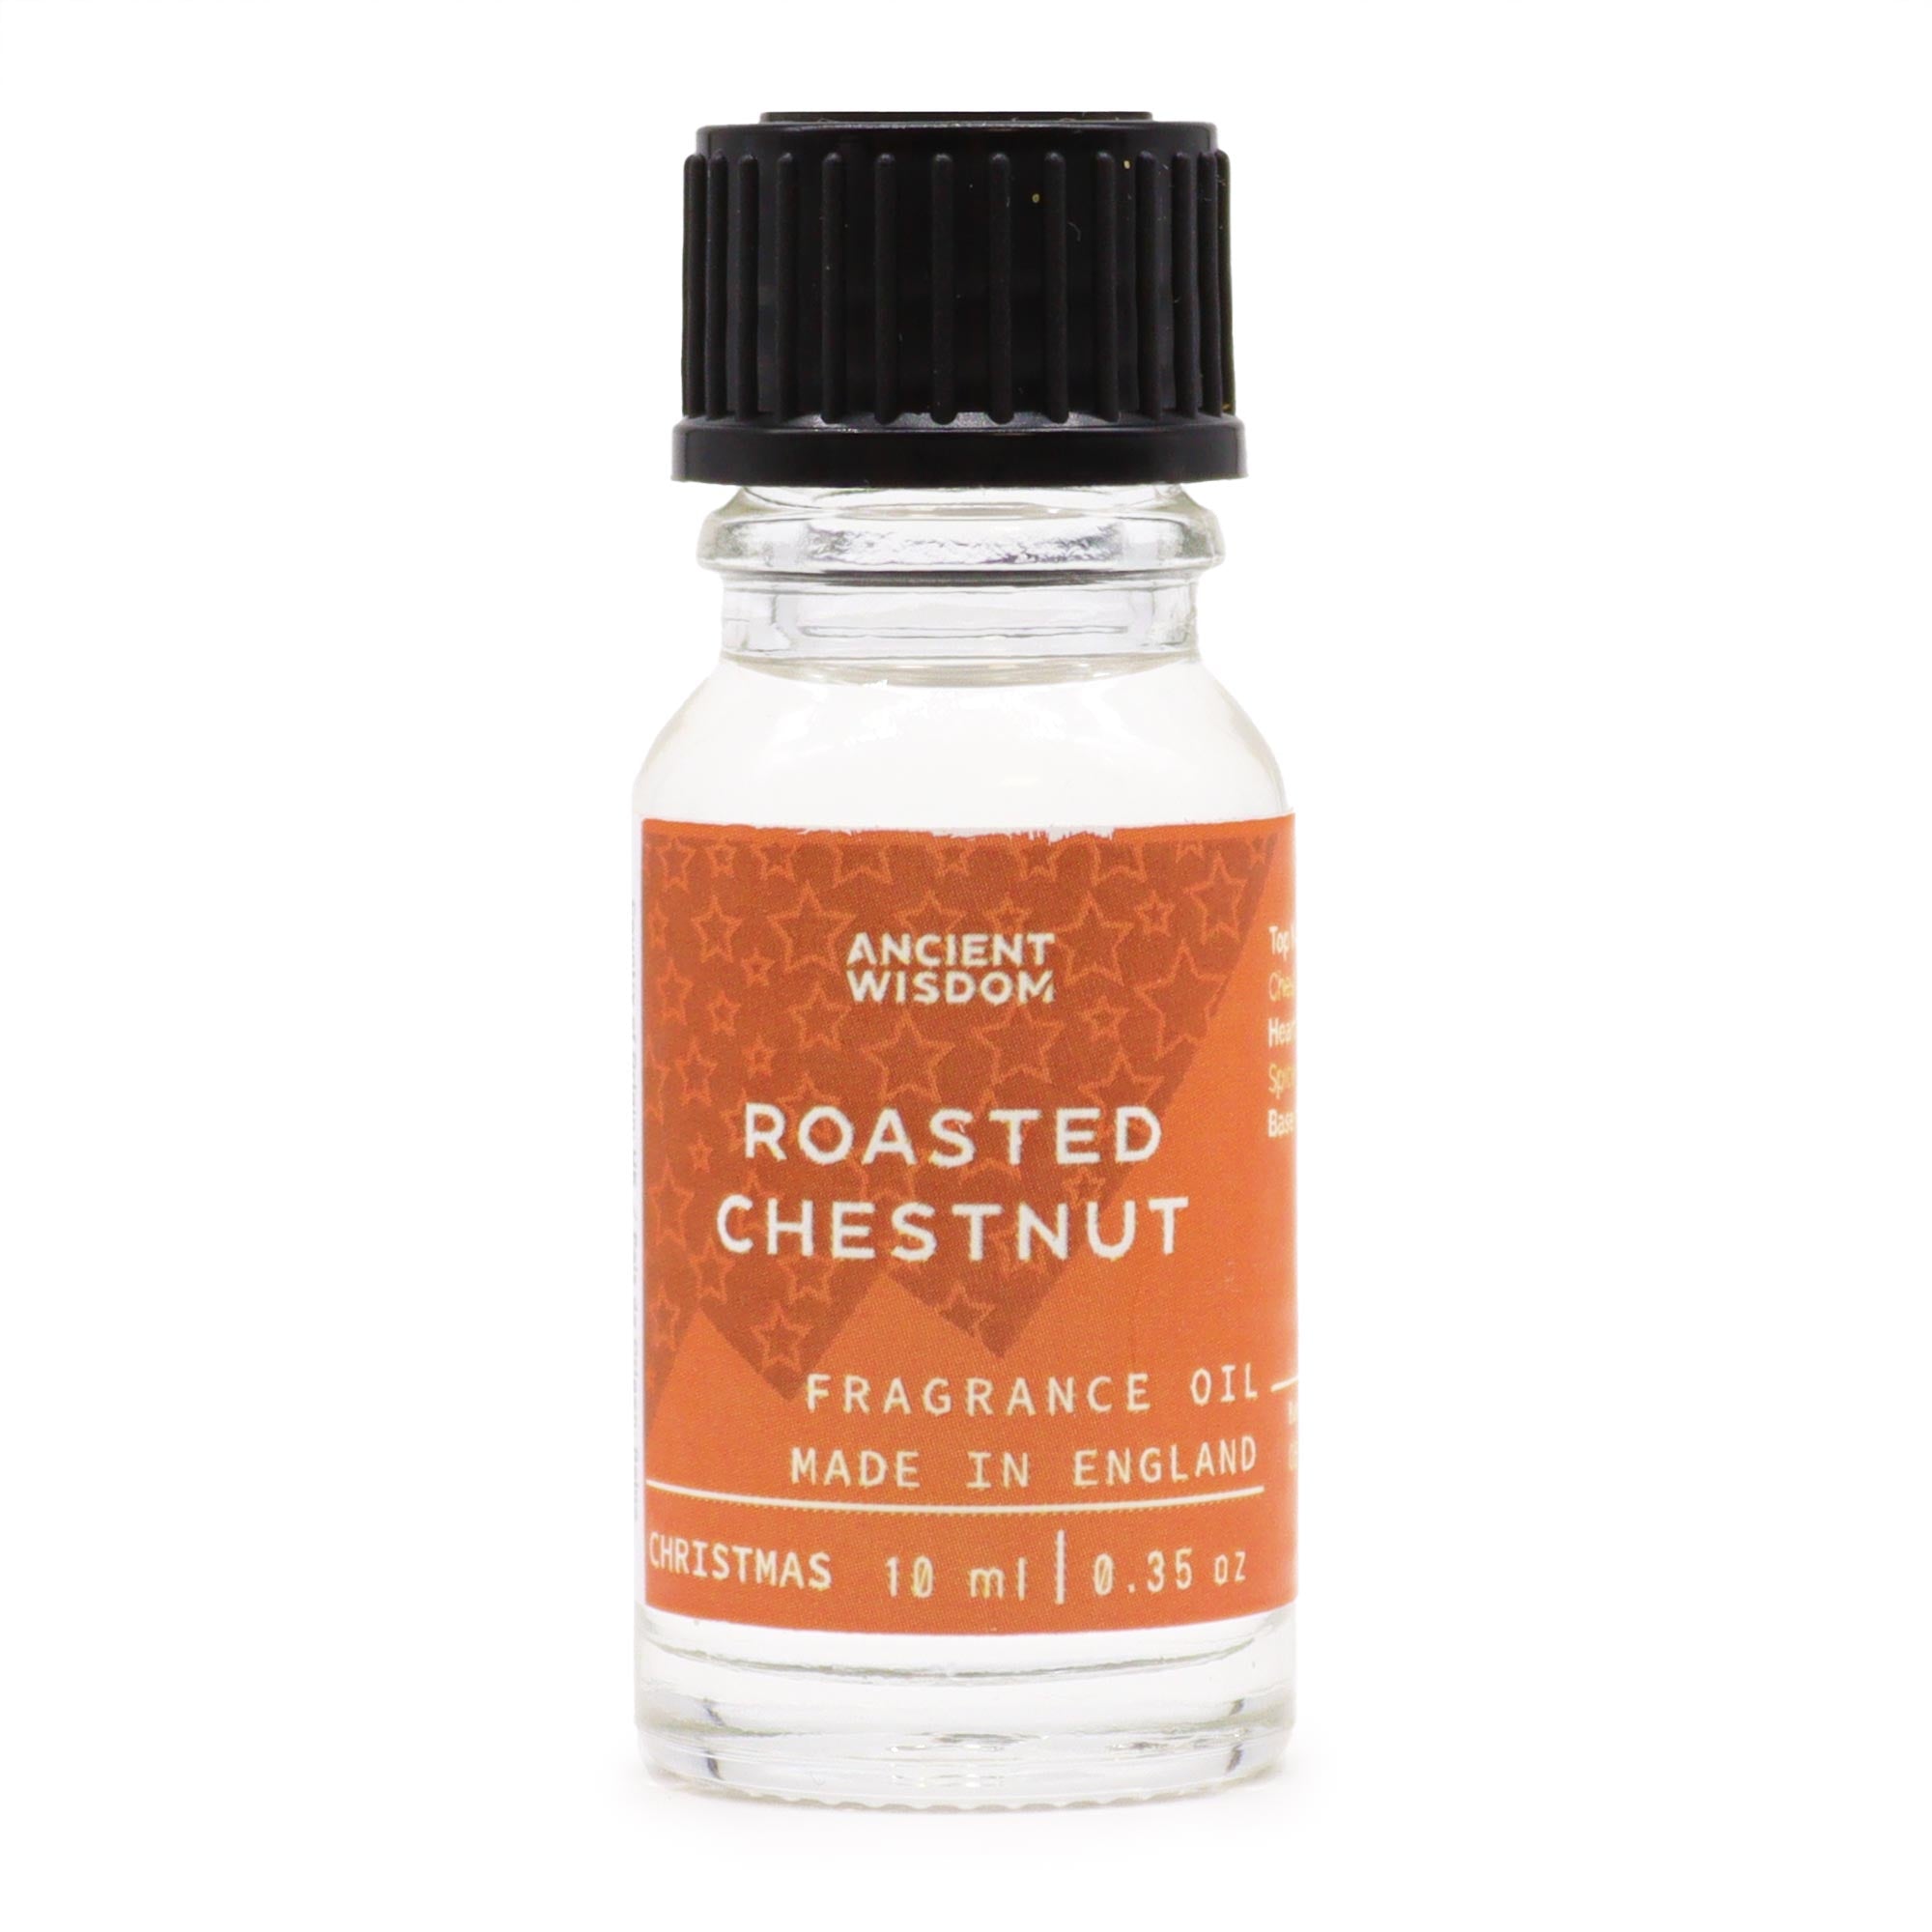 View Roasted Chestnut Fragrance Oil 10ml information